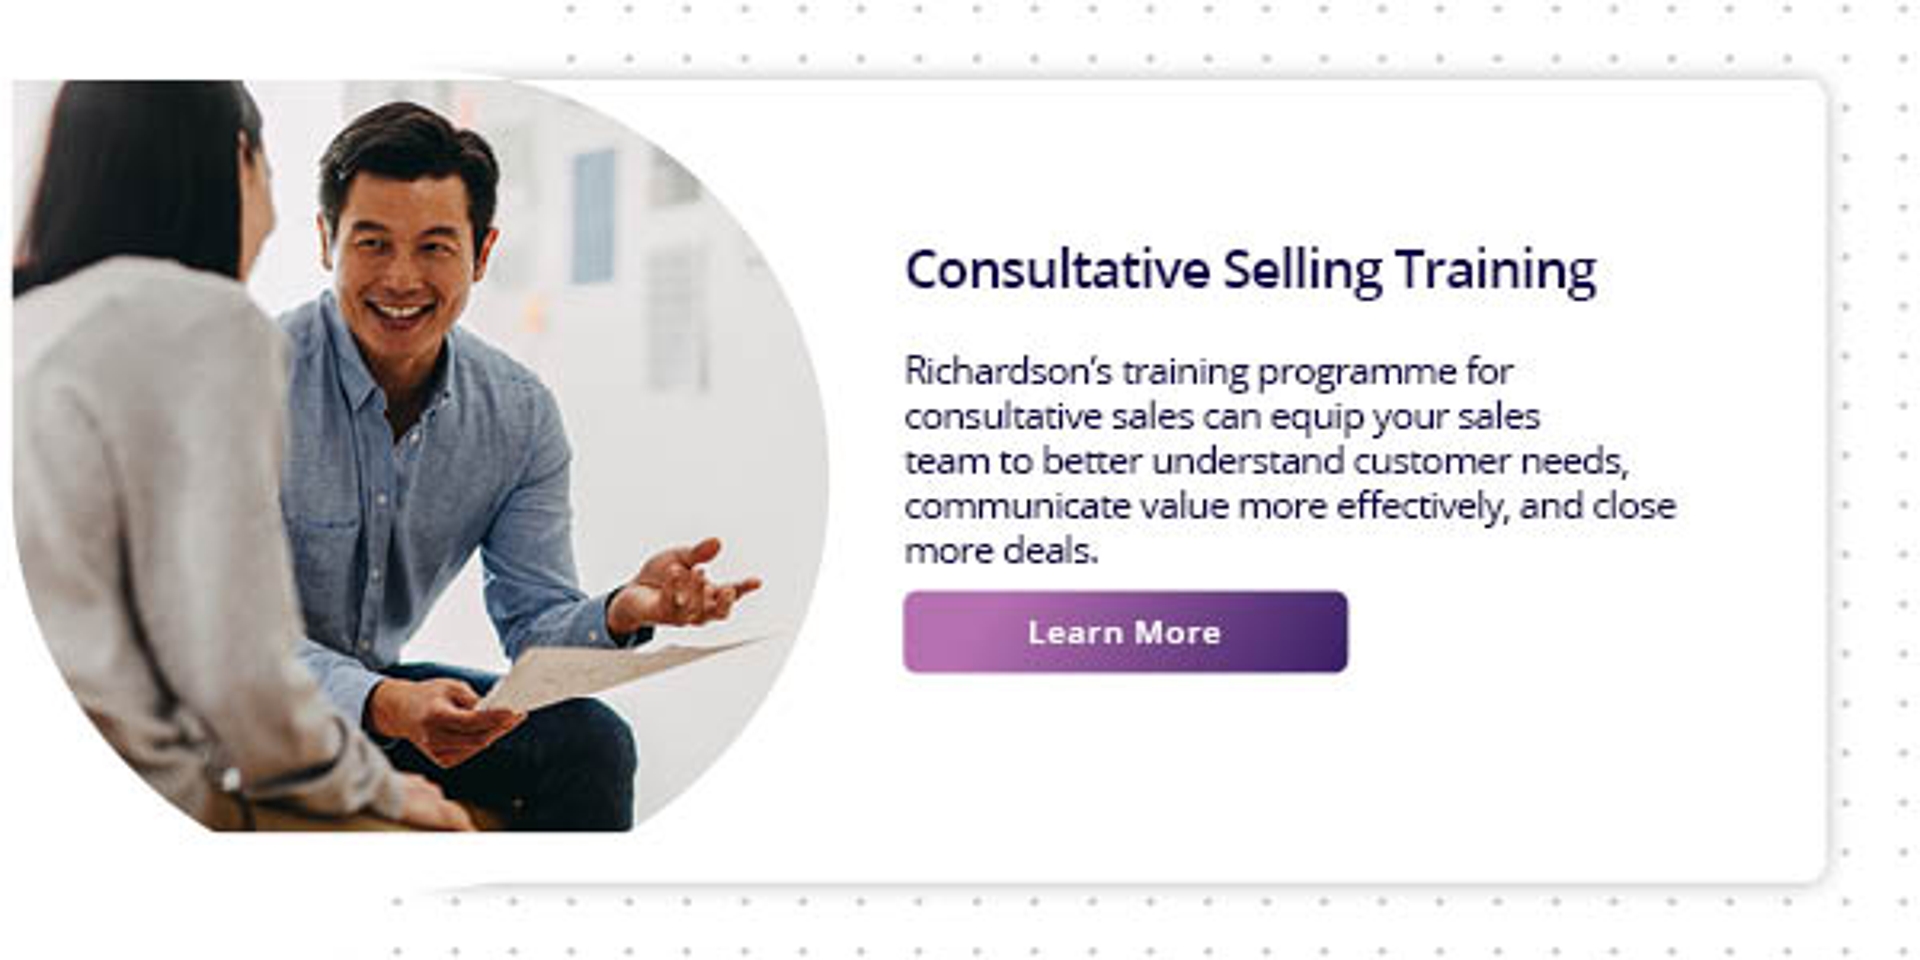 learn about richardson consultative selling training program